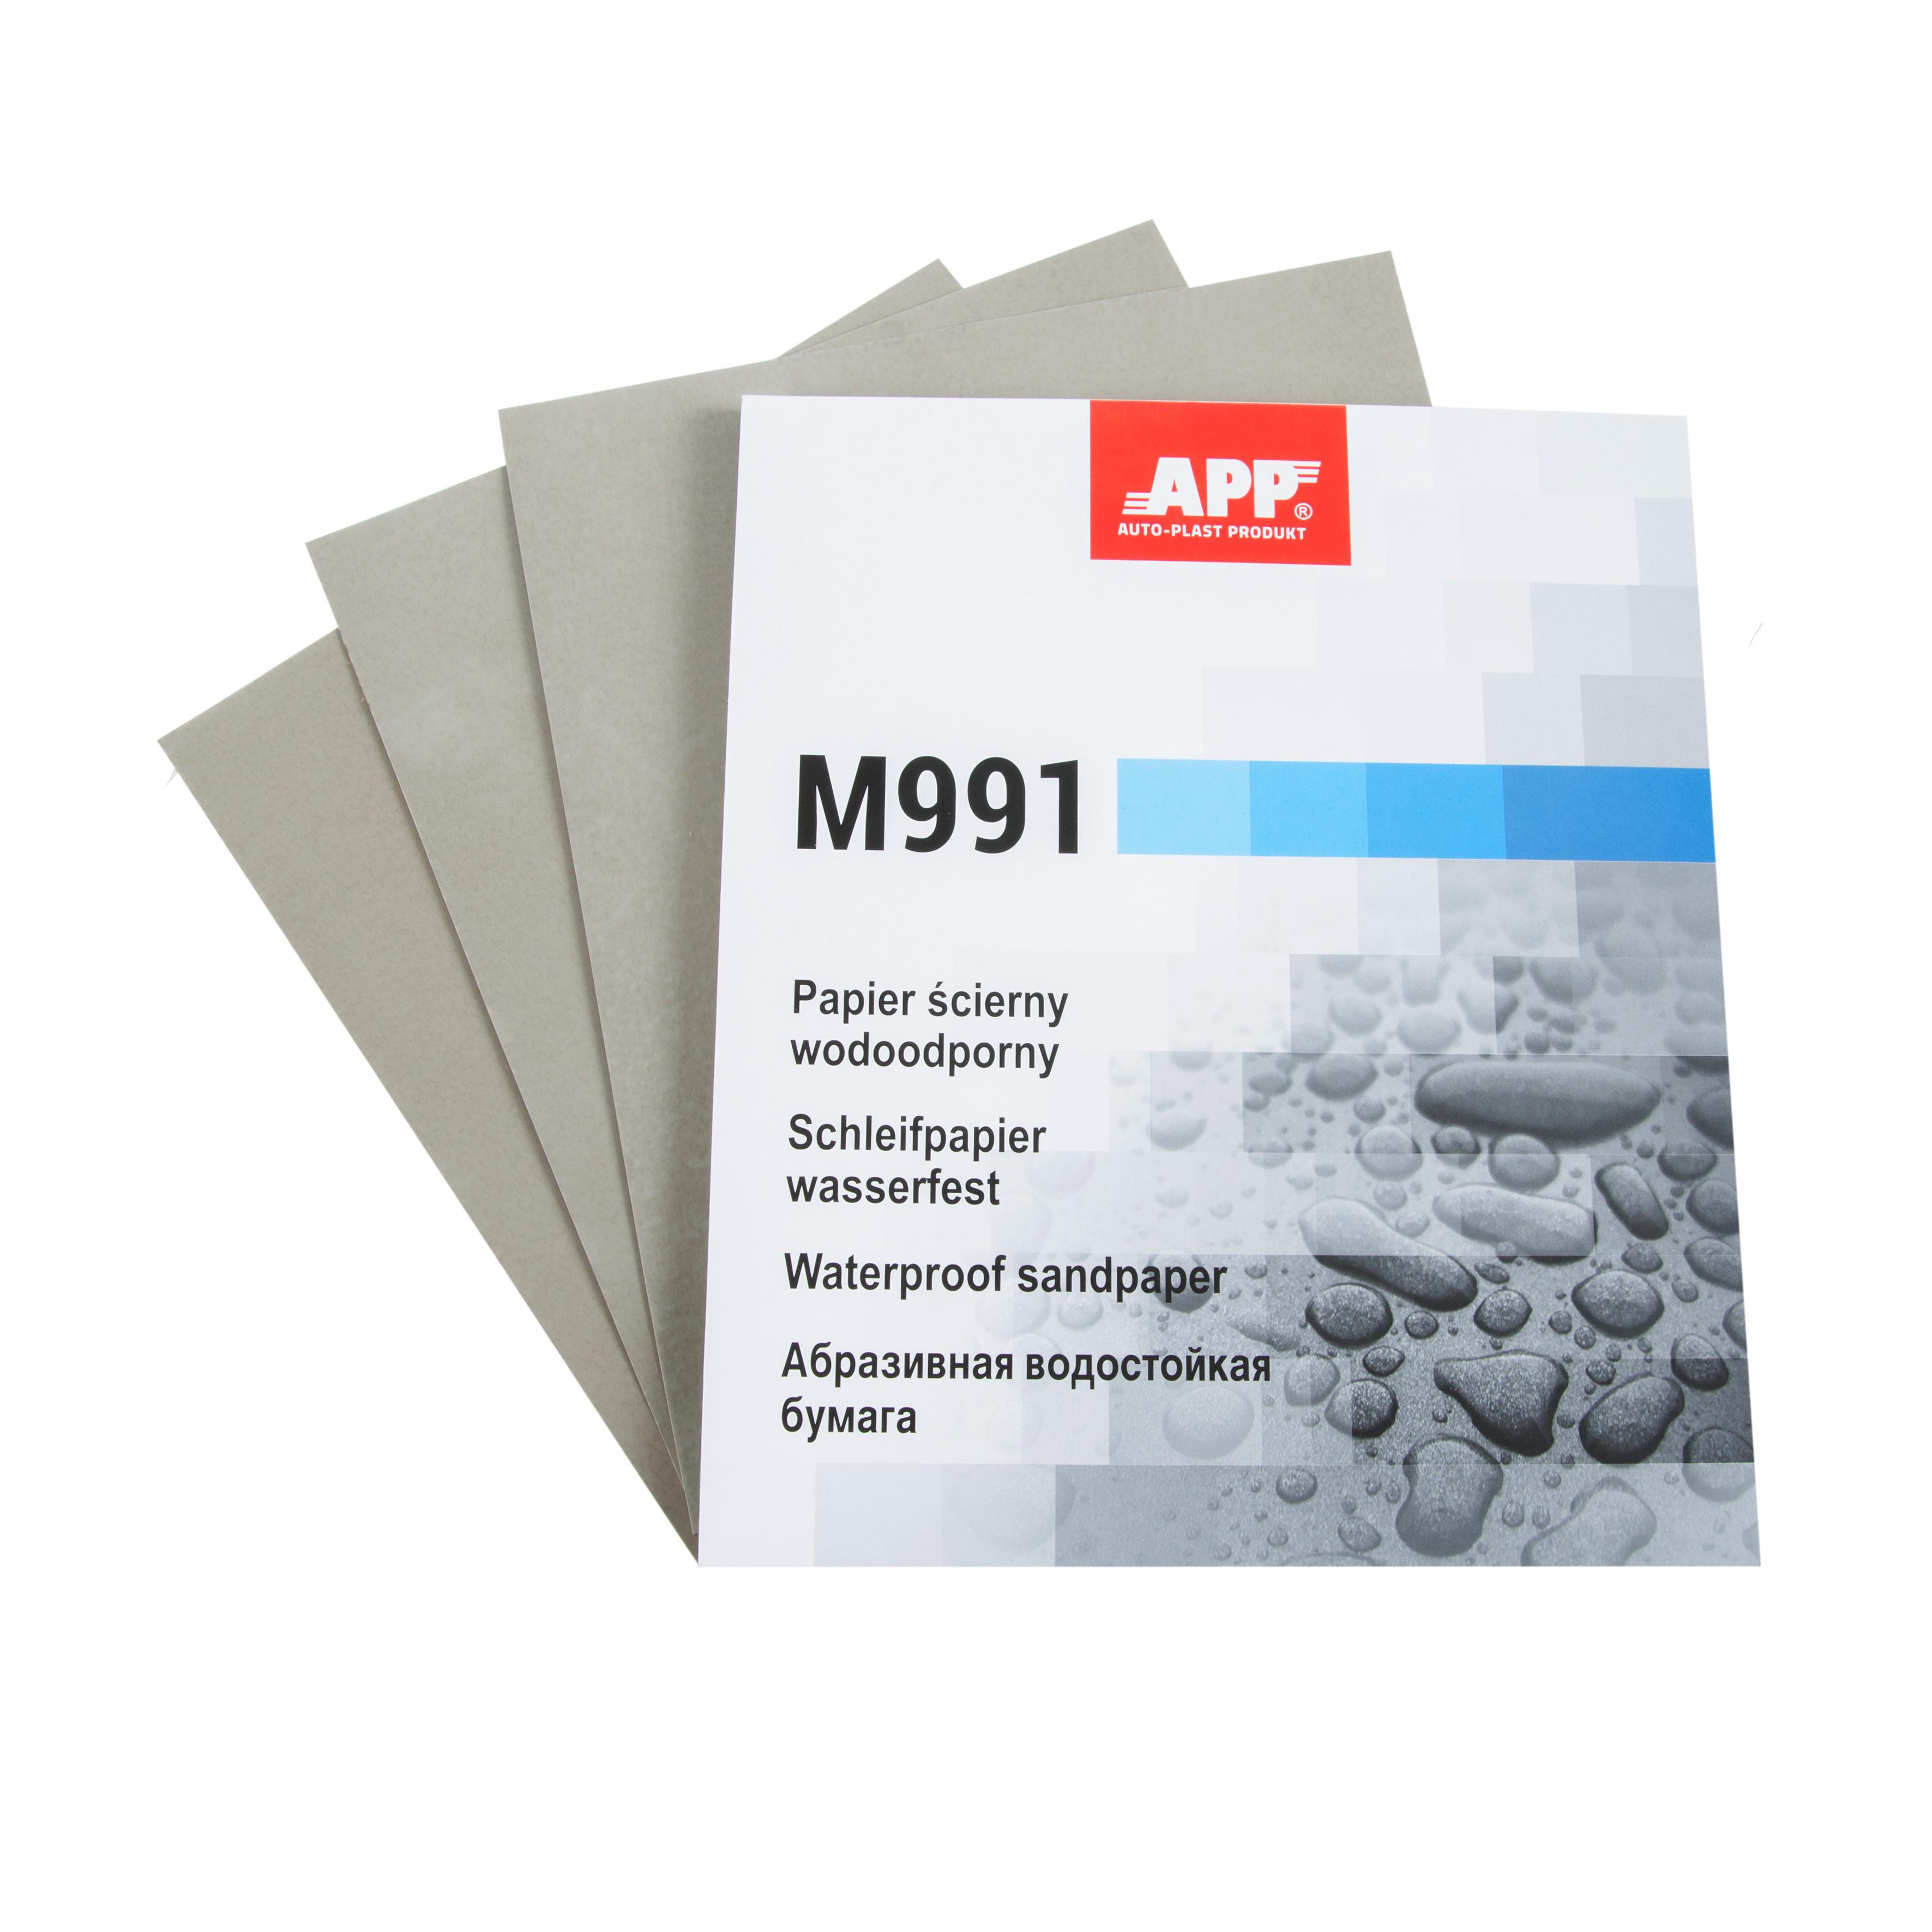 APP 40MW3000 Schleifpapier M991 wasserfest P3000 blau 230 mm x 280 mm 50 Stück | Wasserschleifpapier WP waterproof Blätter Sheets